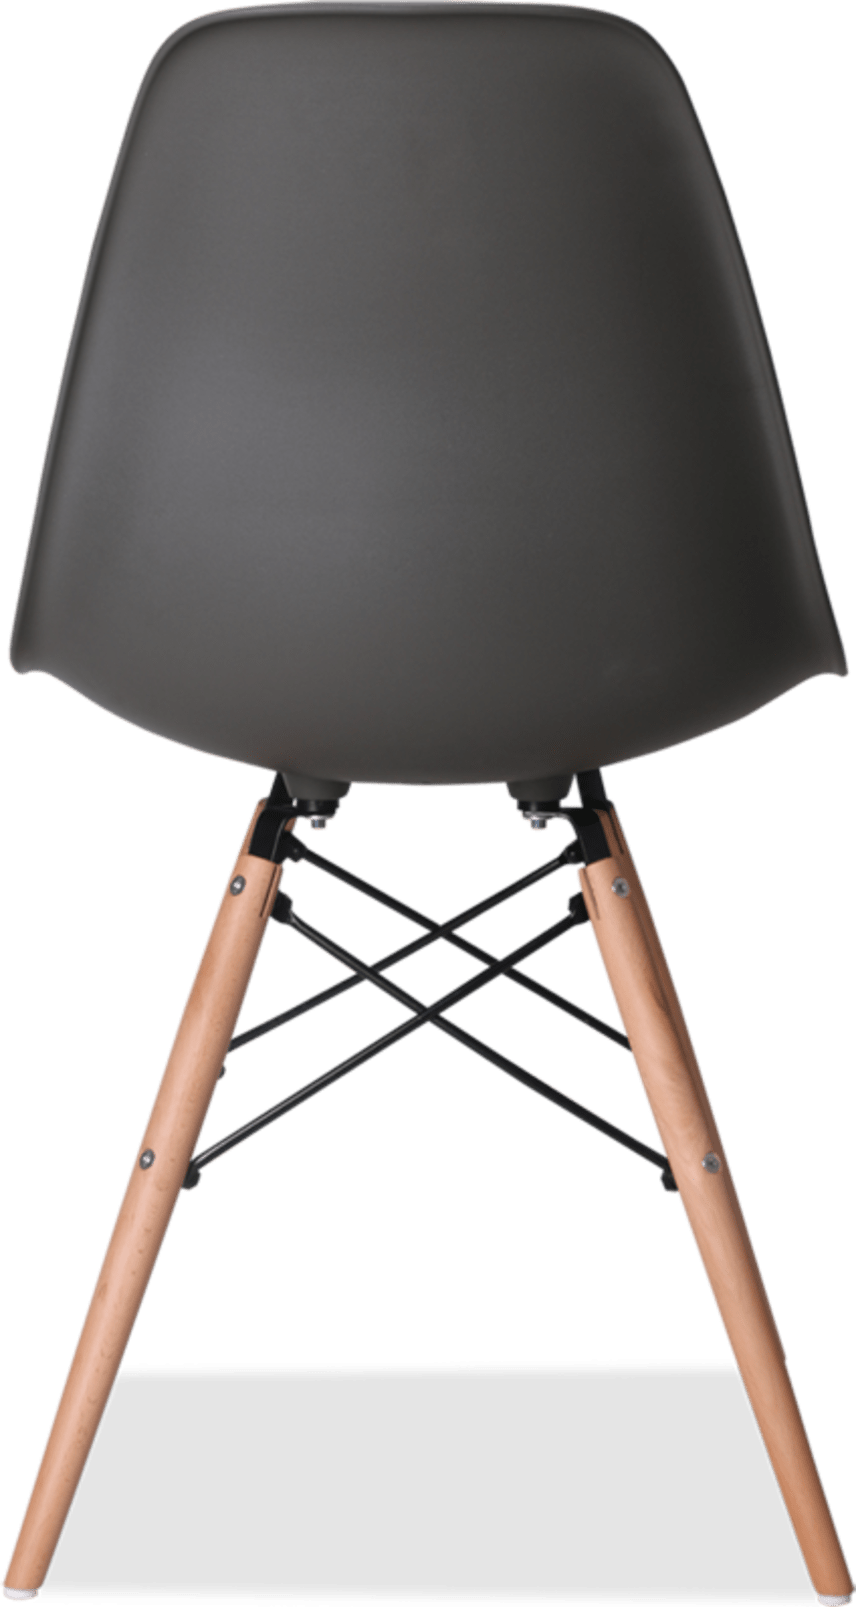 DSW Style Chair Basalt/Light Wood image.